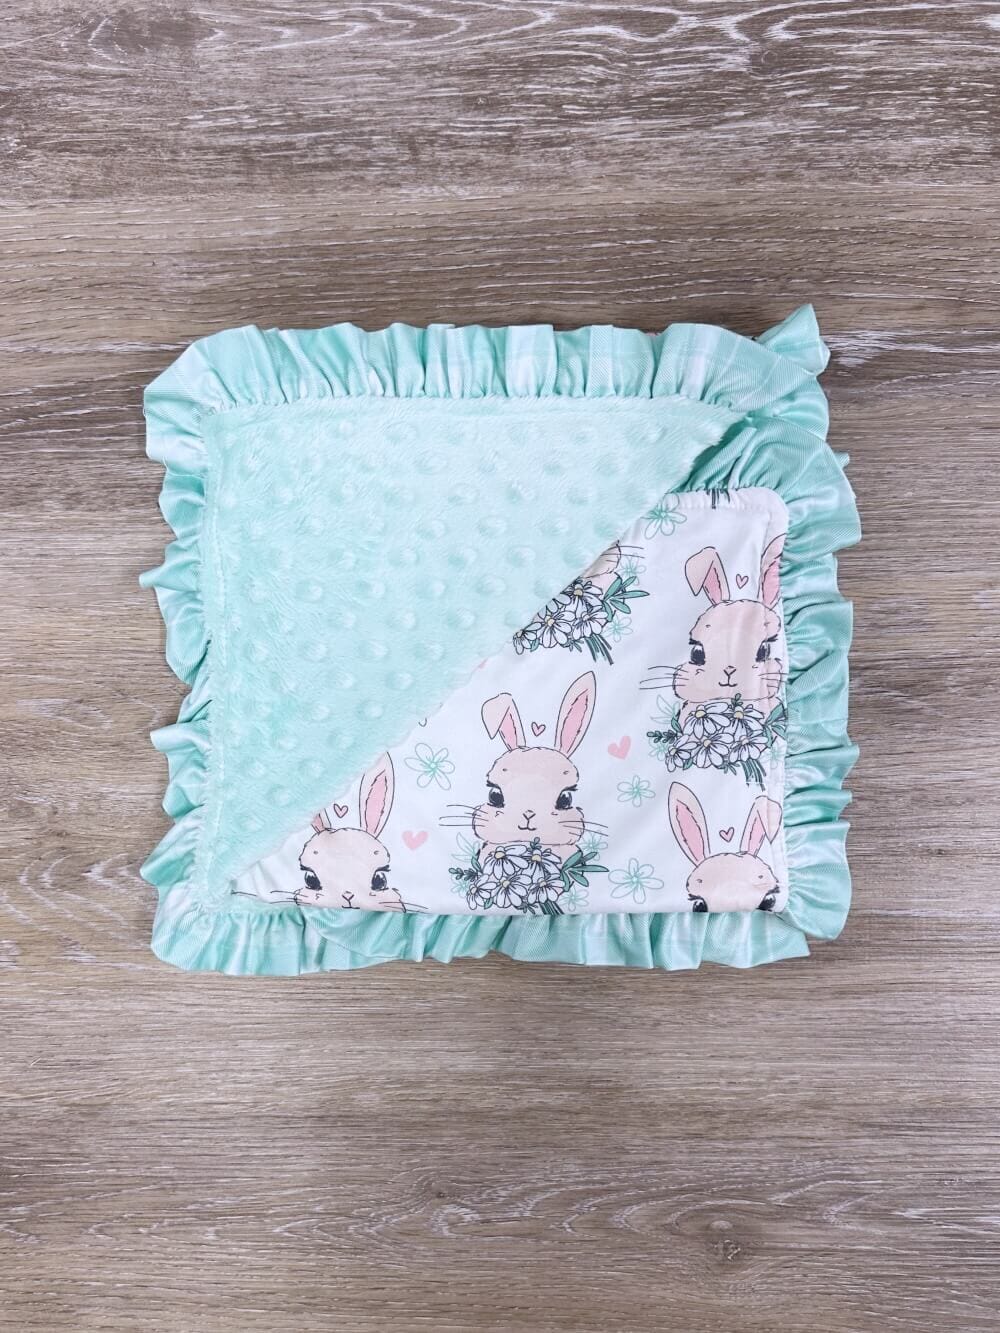 Mint Ruffle Bunnies Baby or Toddler Minky Blanket - Sydney So Sweet